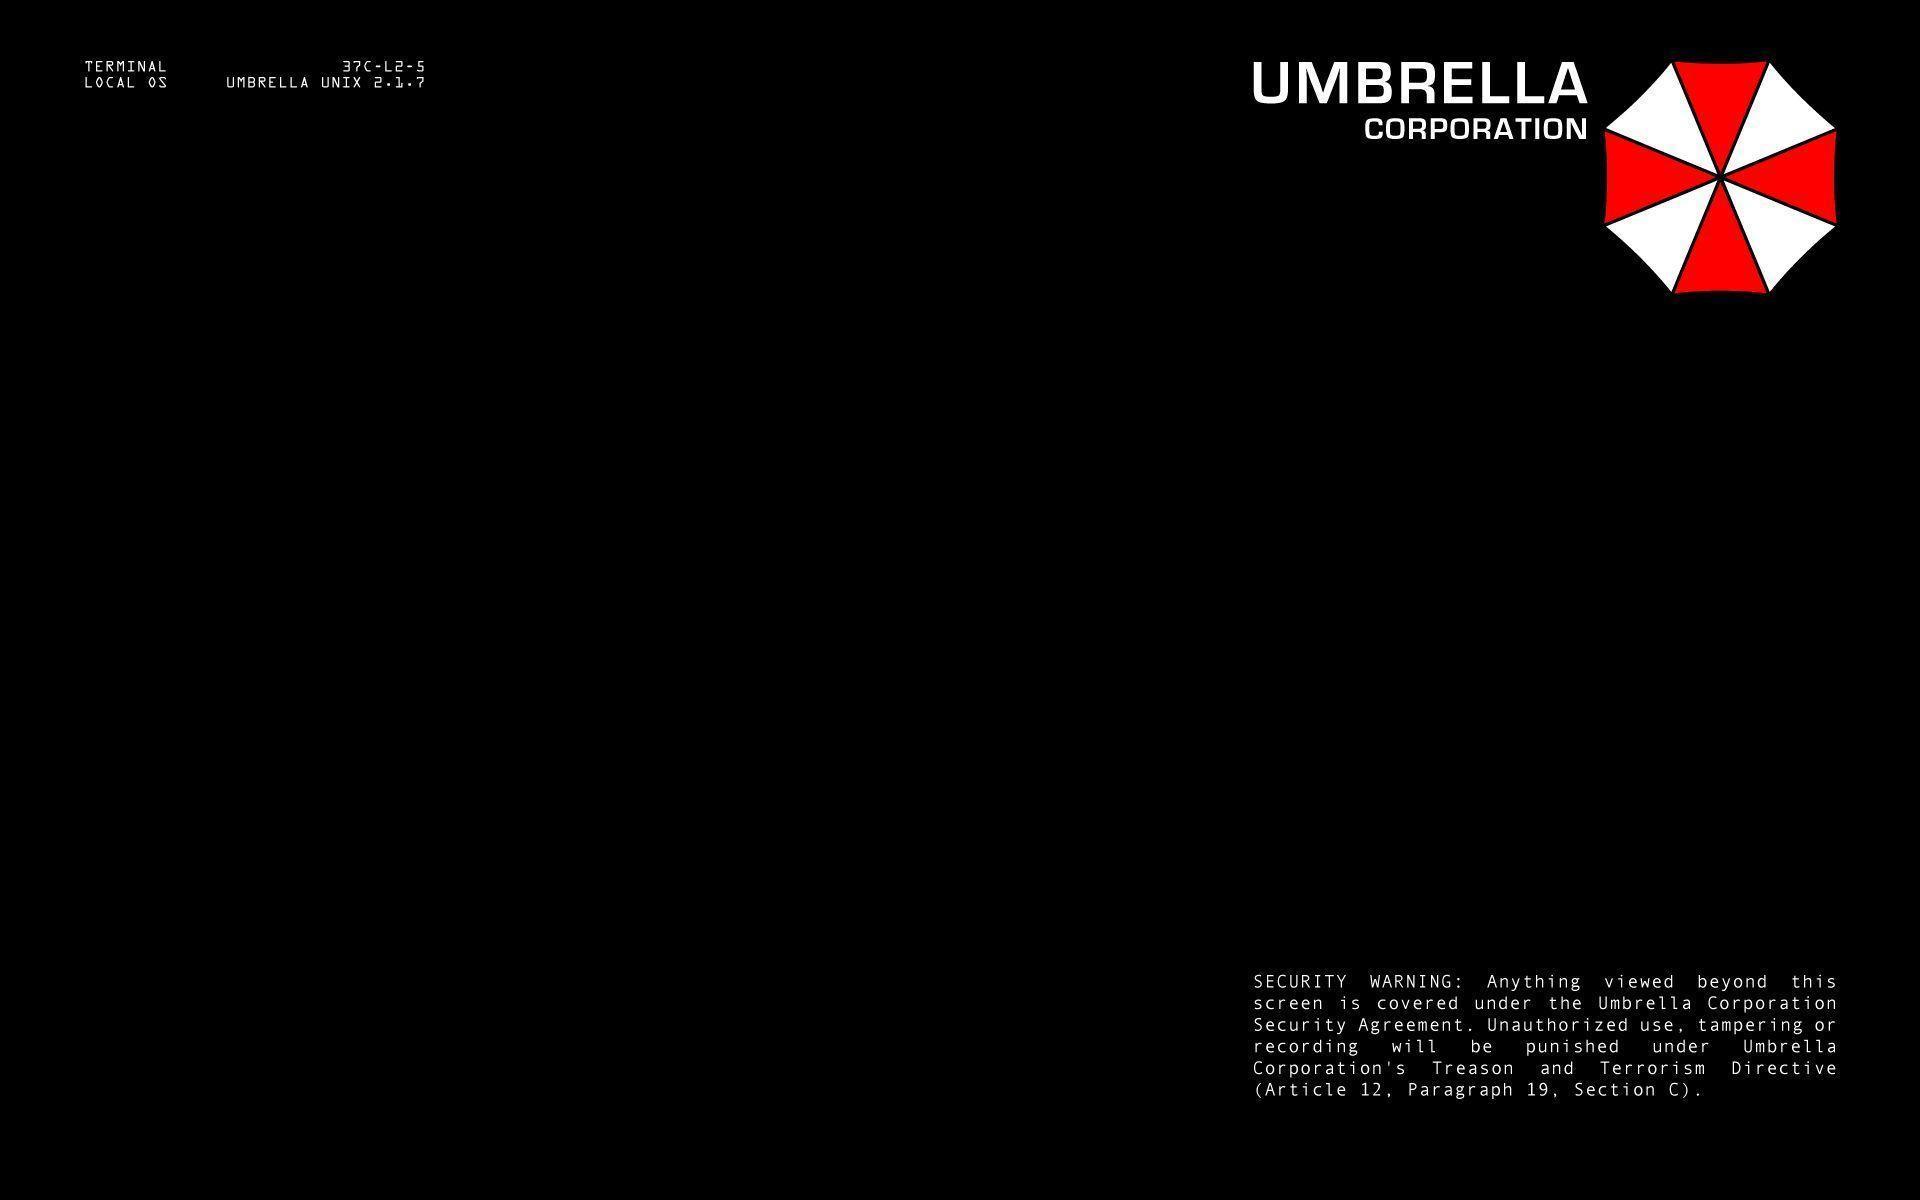 Umbrella Corporation Backgrounds